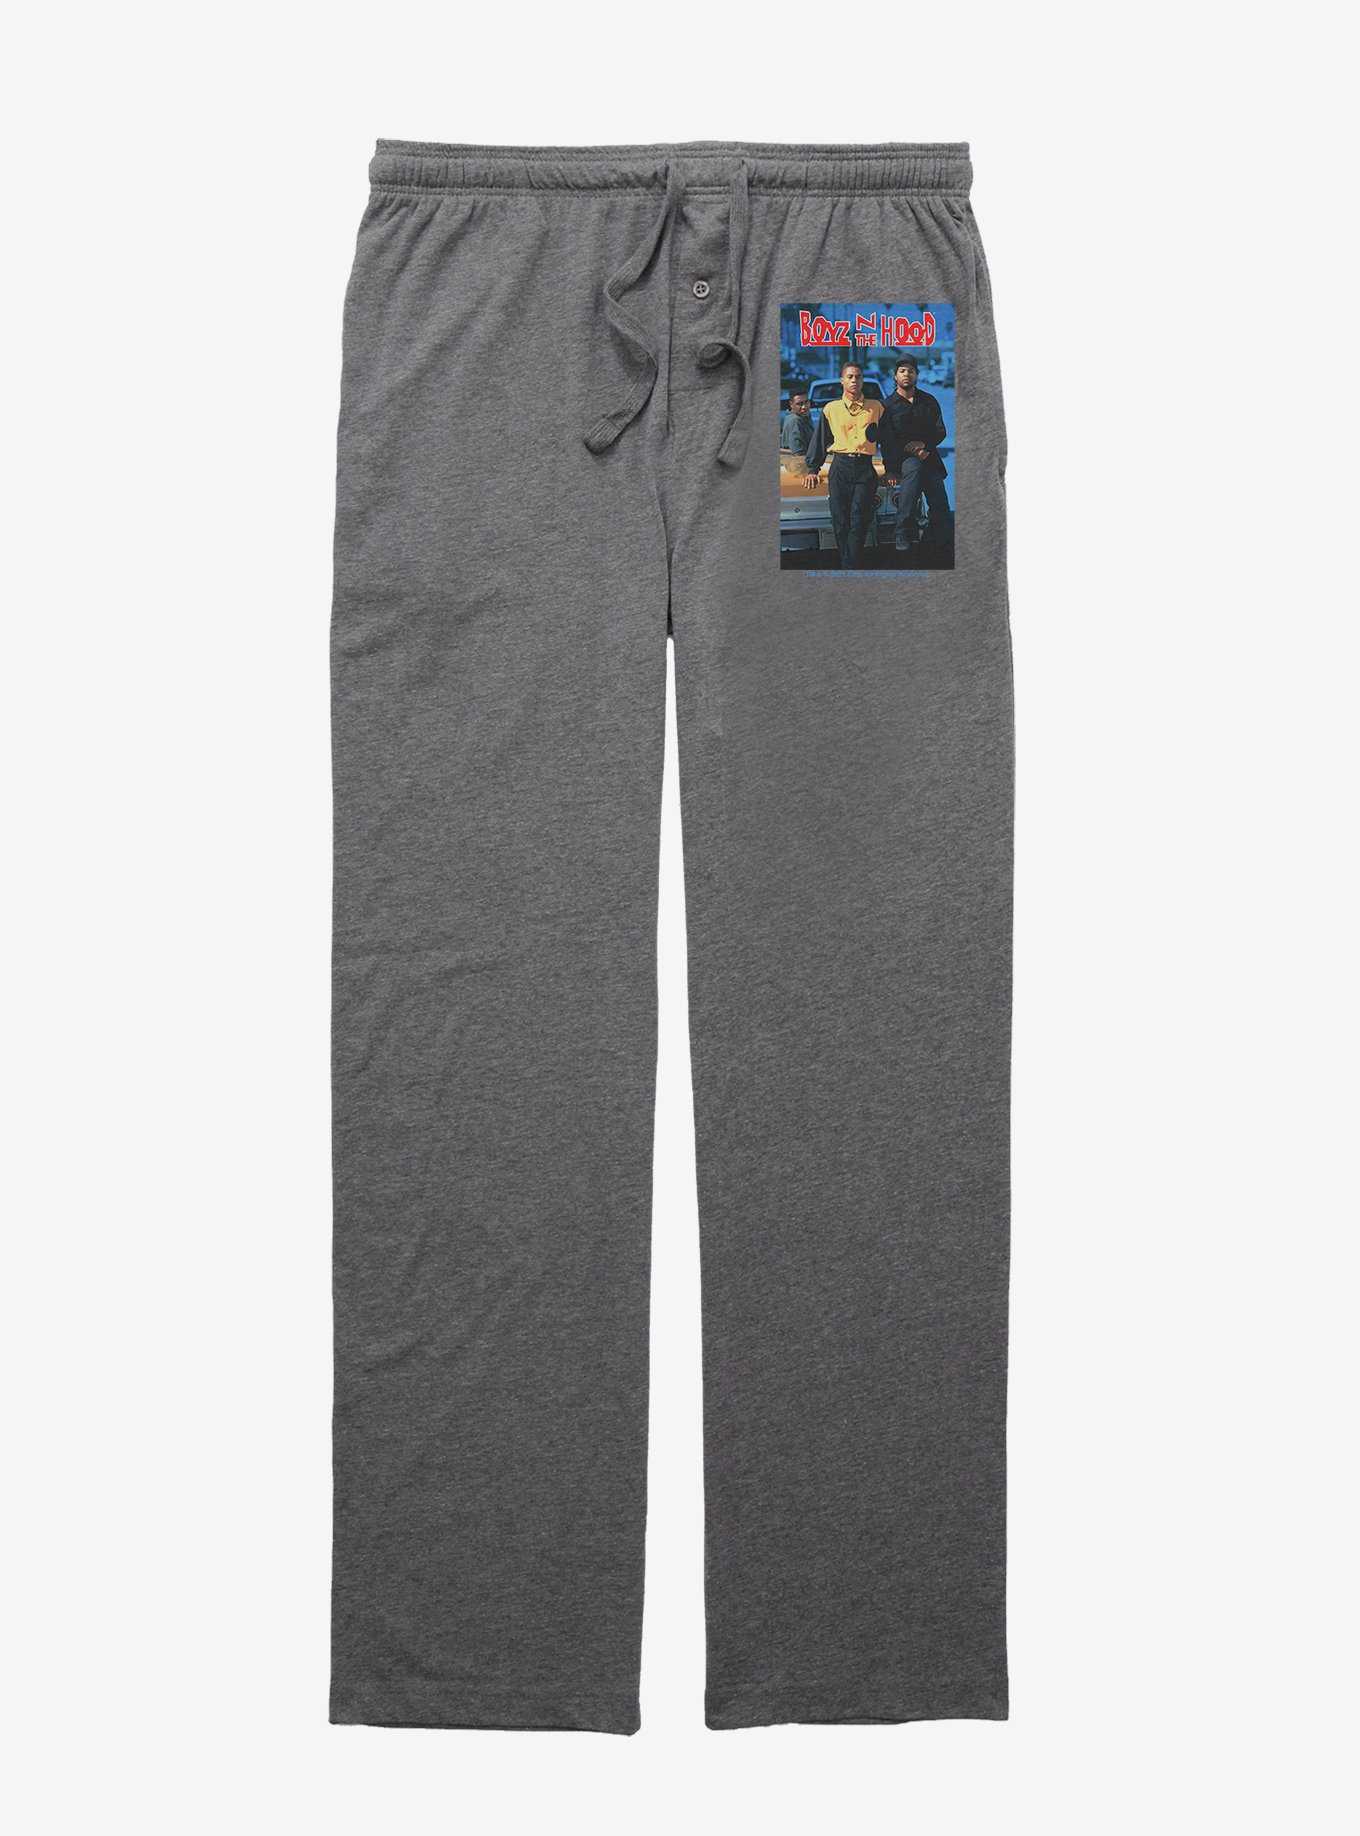 Boyz N The Hood Movie Poster Pajama Pants, , hi-res